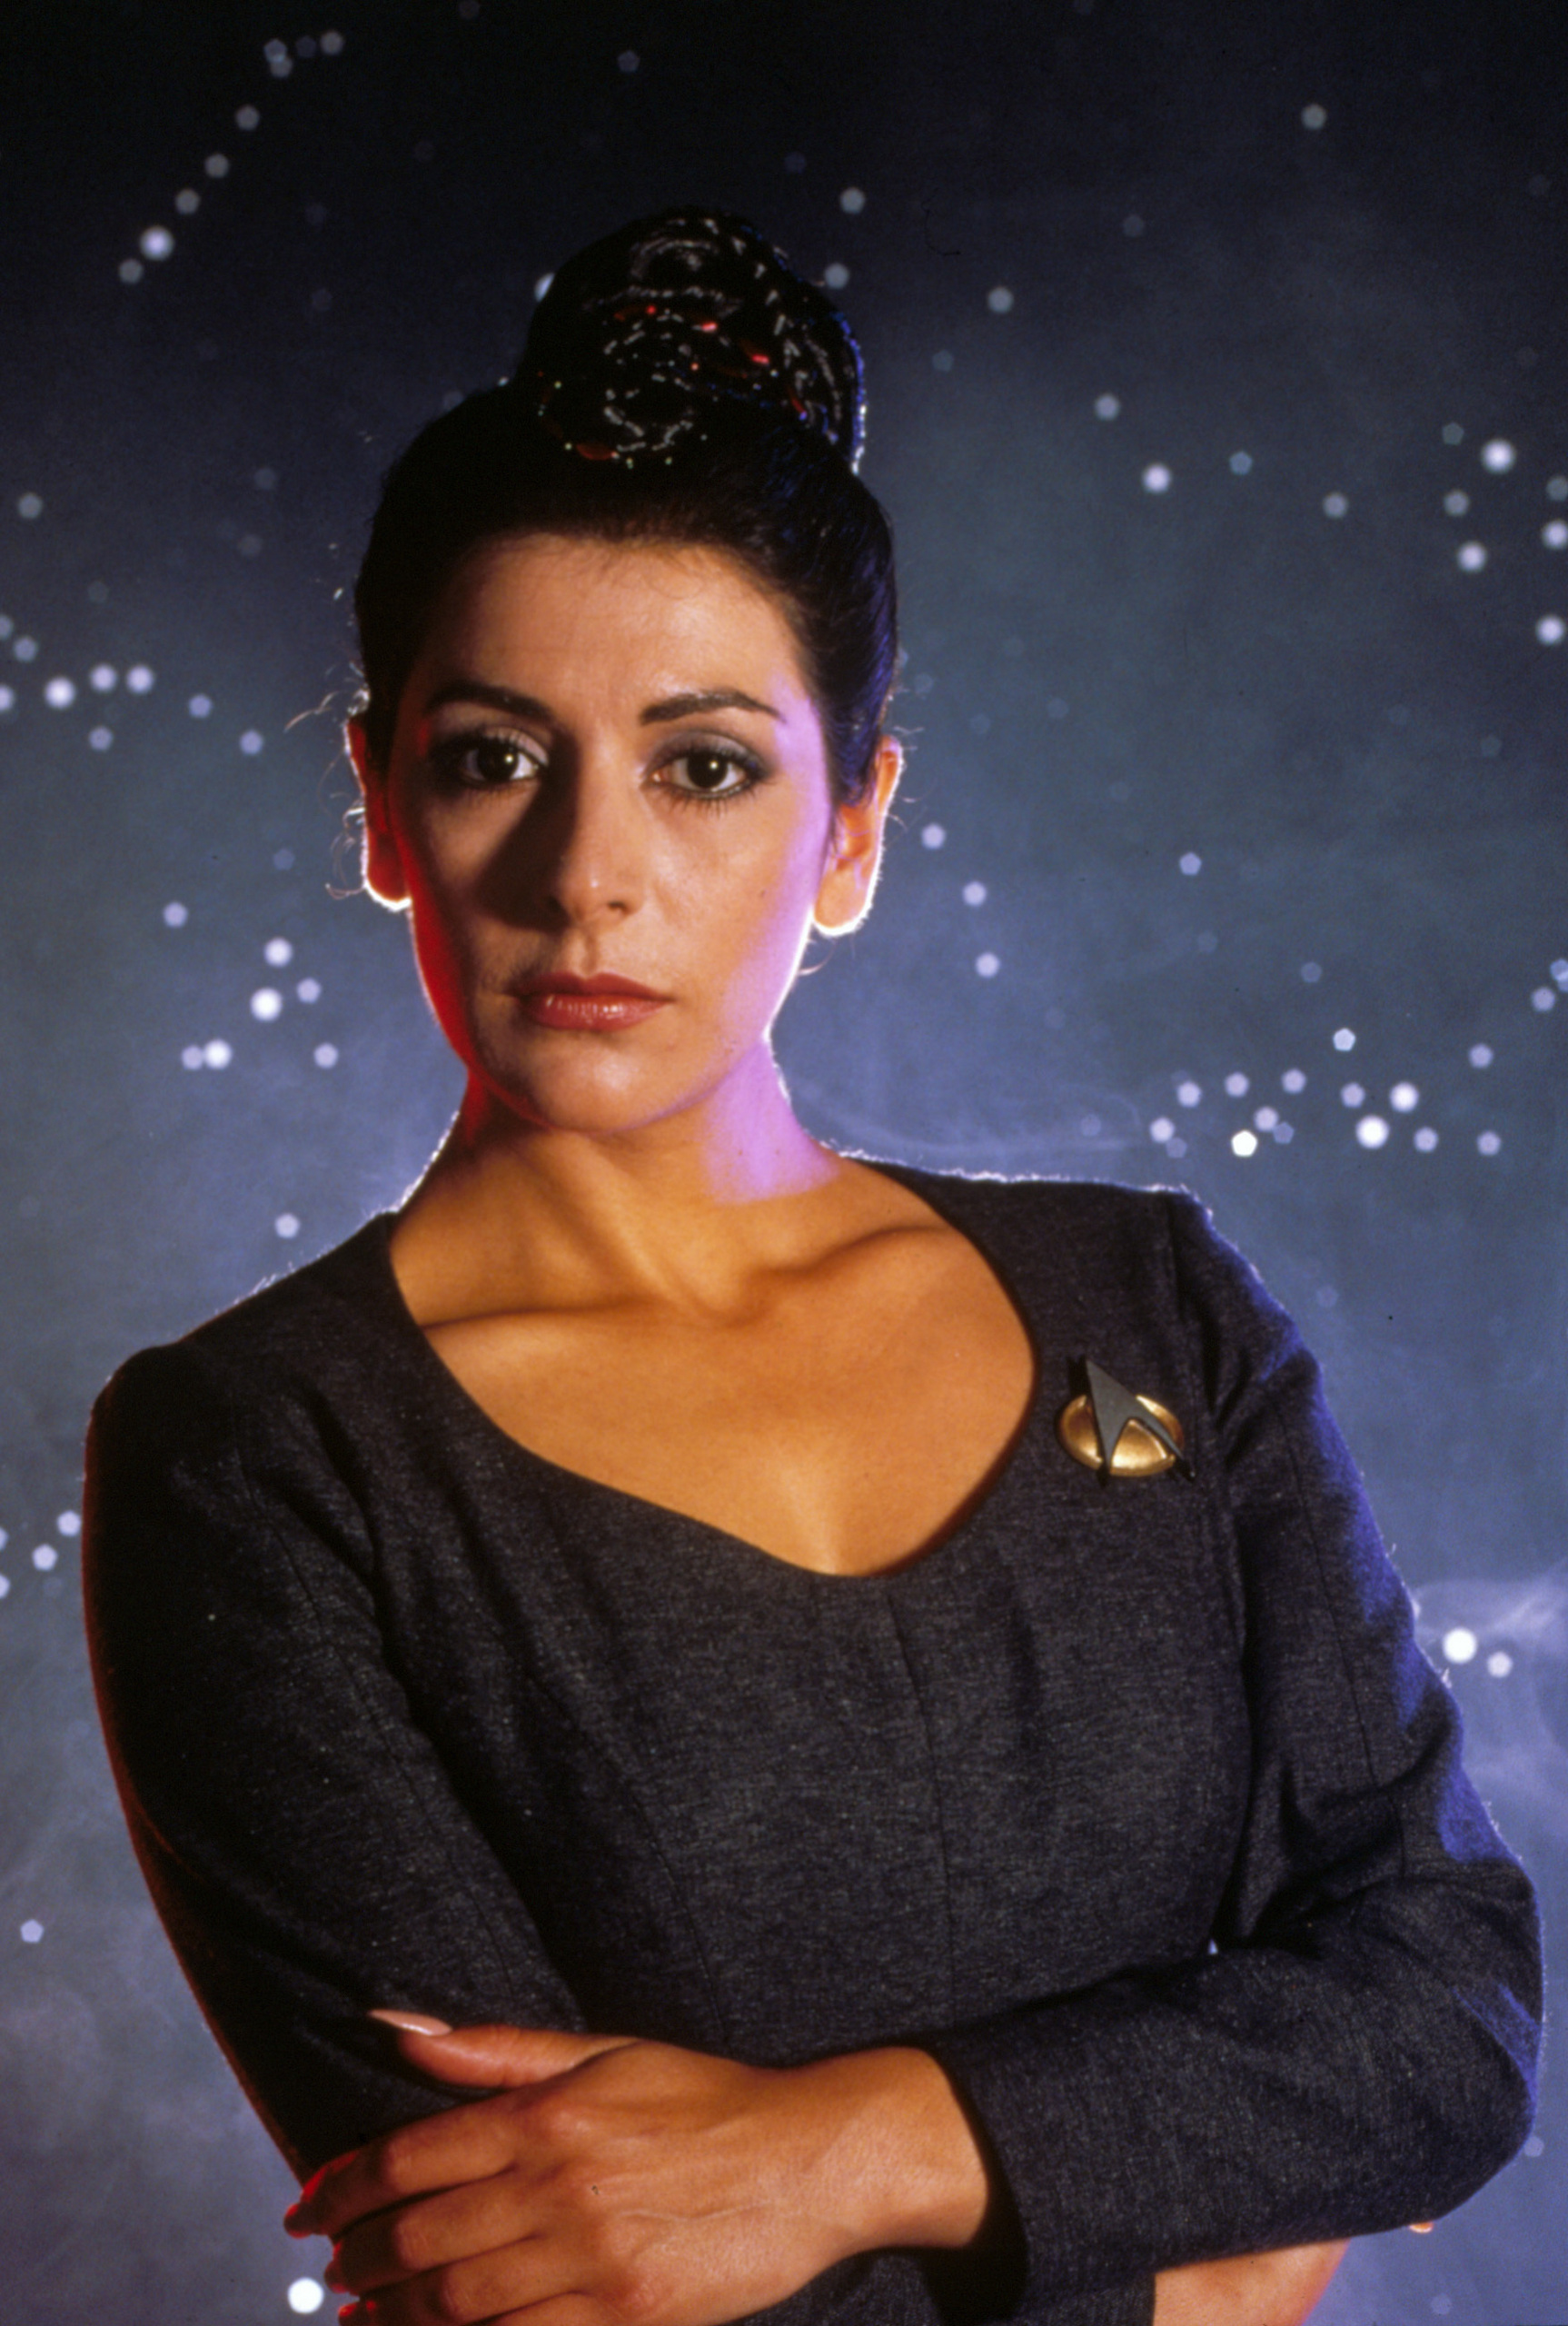 Counselor Deanna Troi Star Trek The Next Generation Photo (9406482